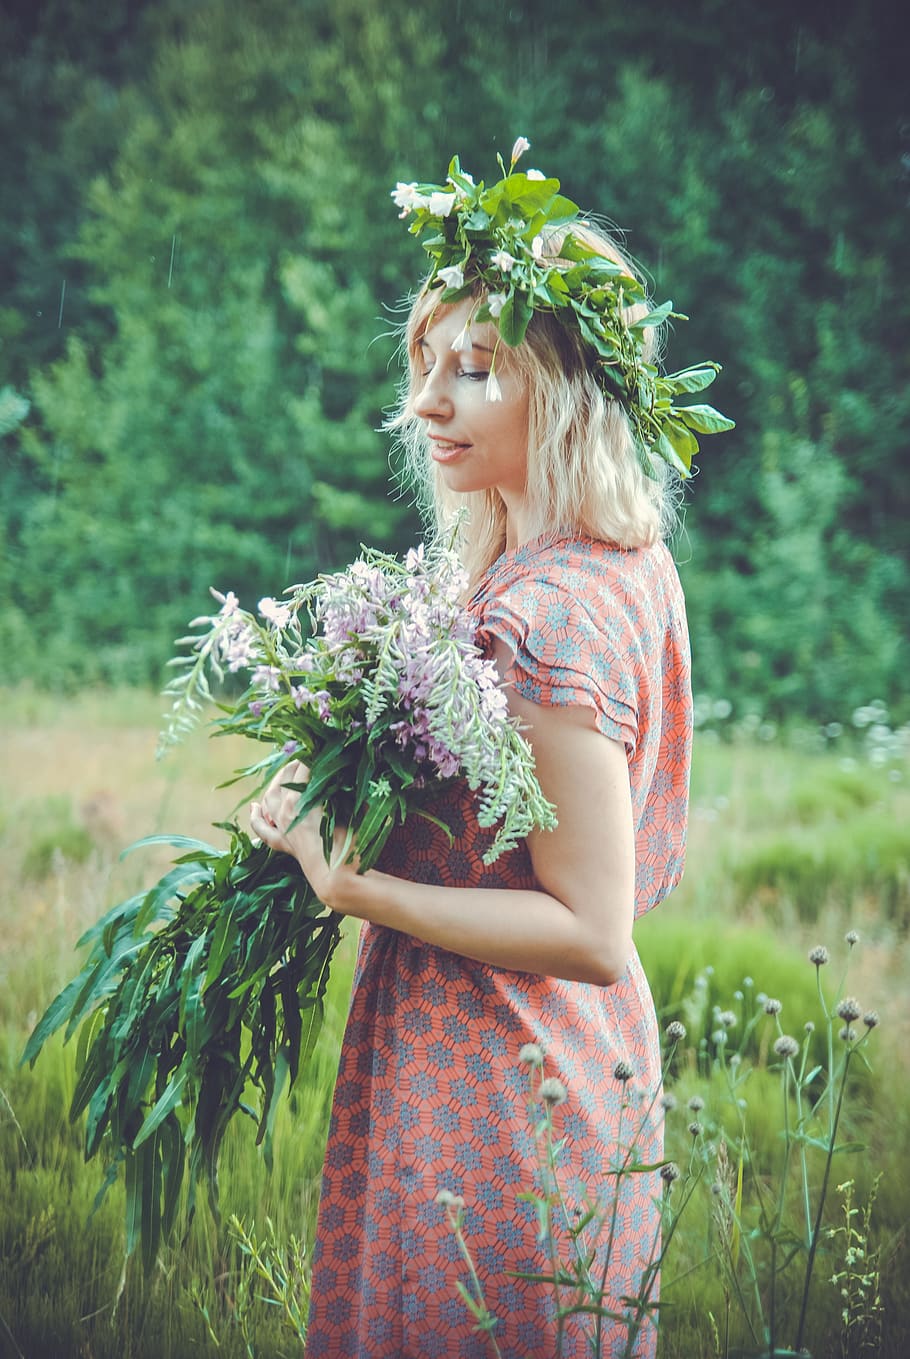 ramo, campo, sobre la naturaleza, corona, flores, bosque, verano, imagen rusa, eslavos, rusos